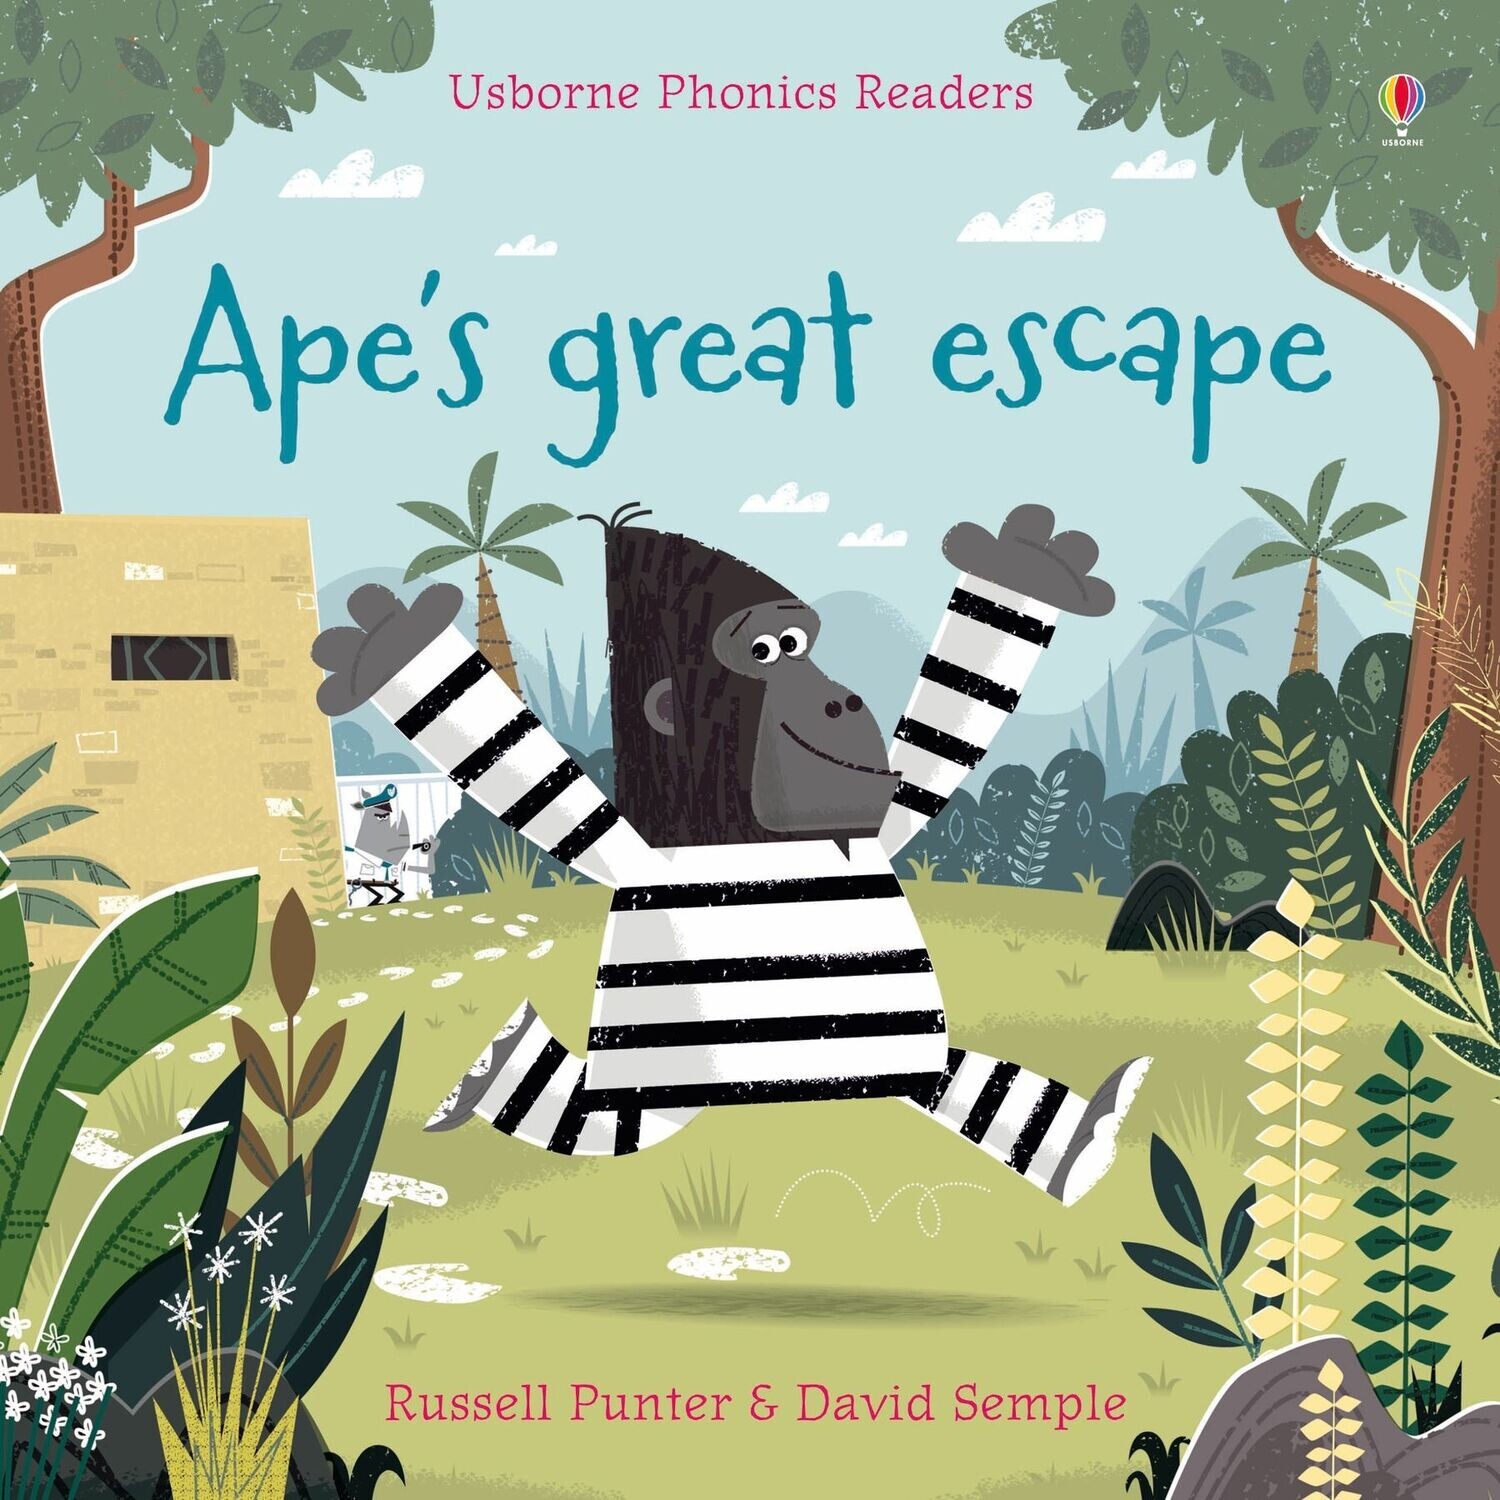 Usborne Ape's Great Escape